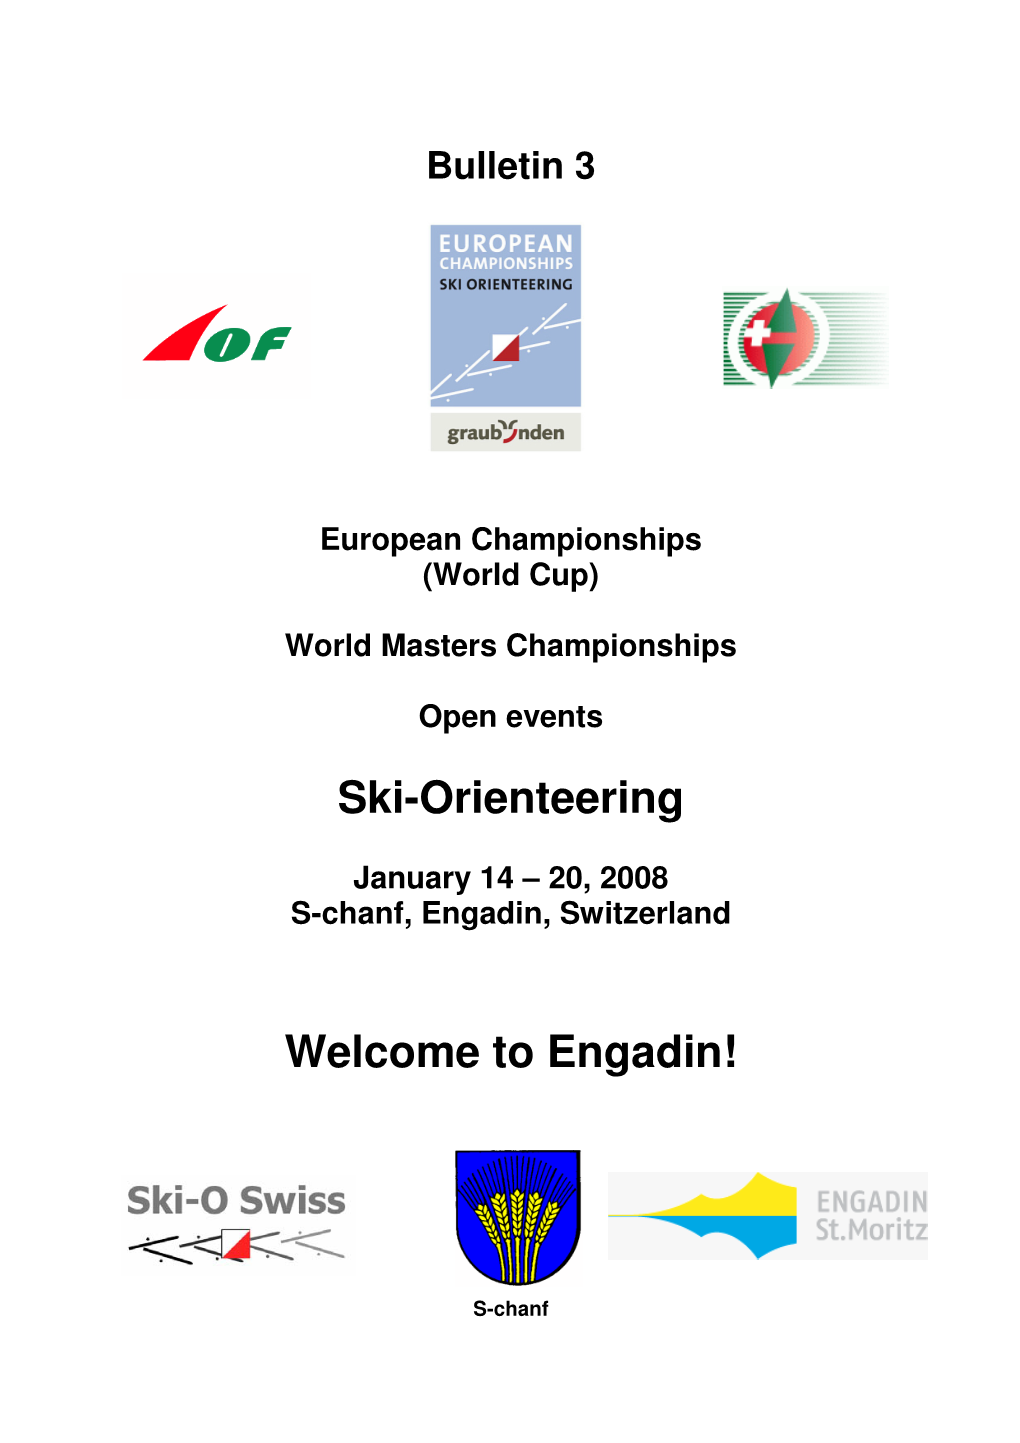 Ski-Orienteering Welcome to Engadin!